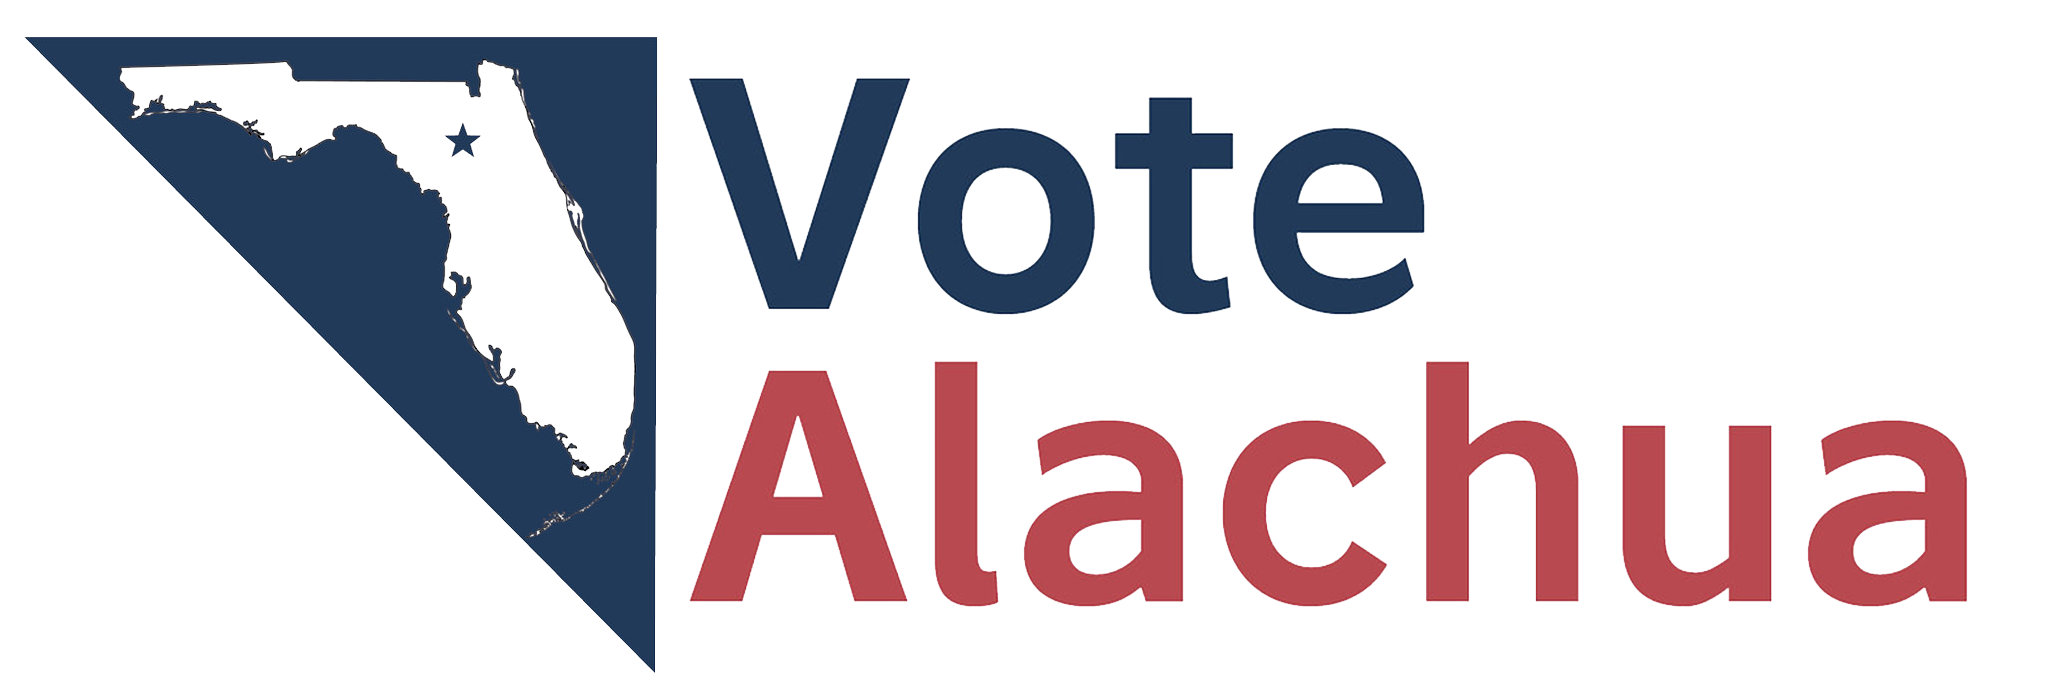 vote alachua